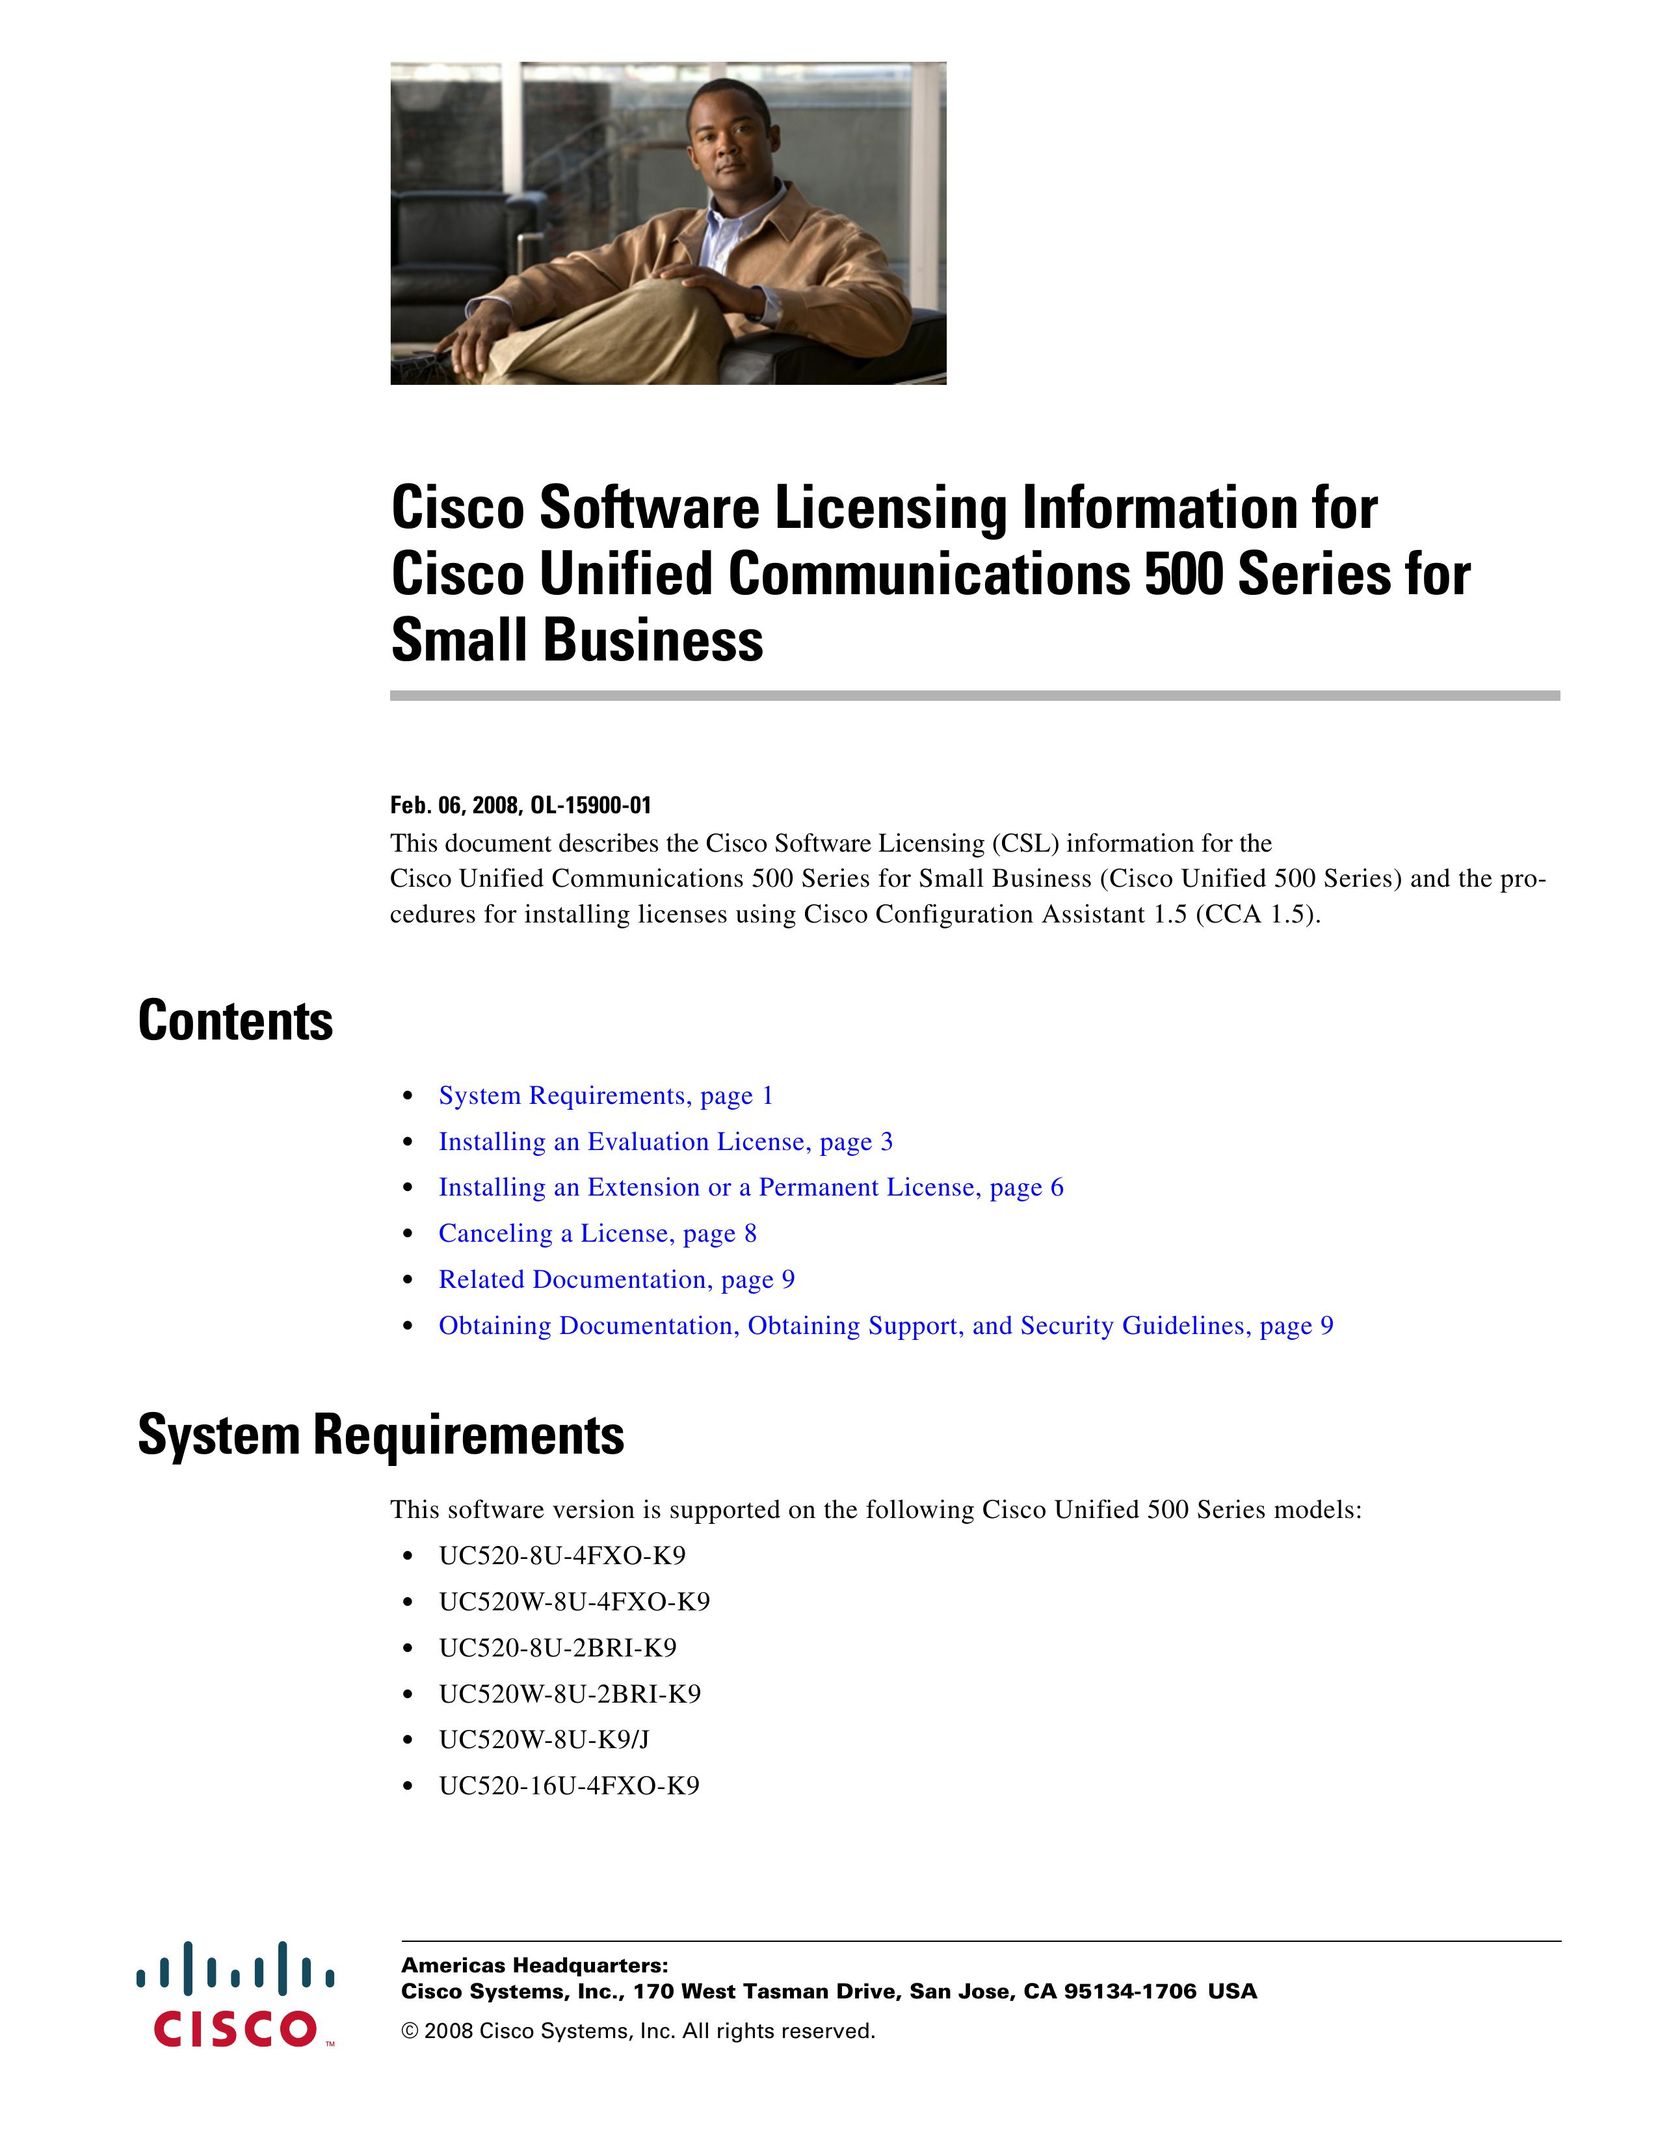 Cisco Systems UC520W8UK9J Computer Hardware User Manual